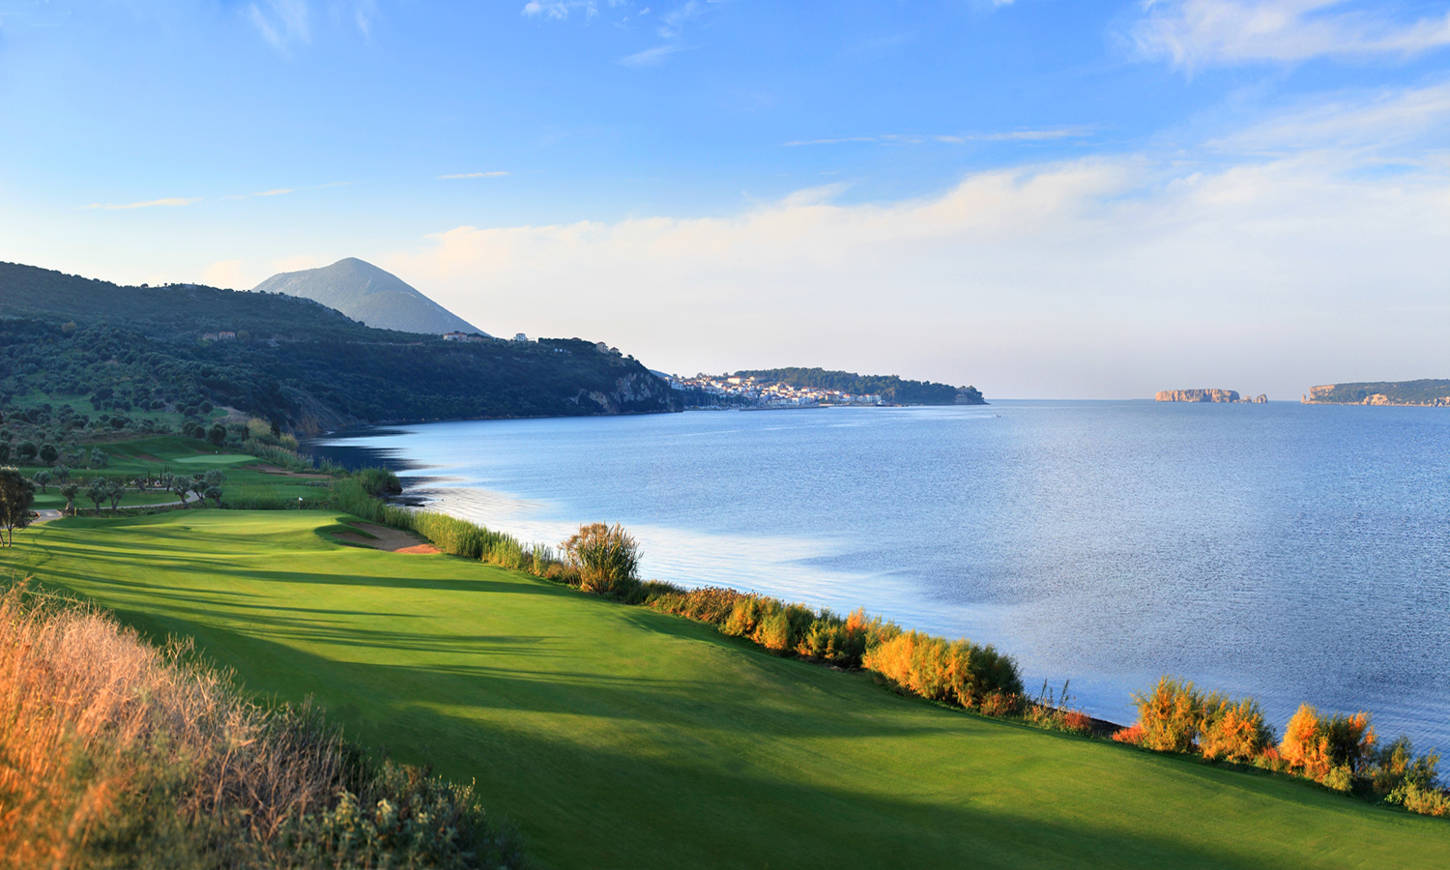 Golfplatz Costa Navarino - The Bay Course 2263